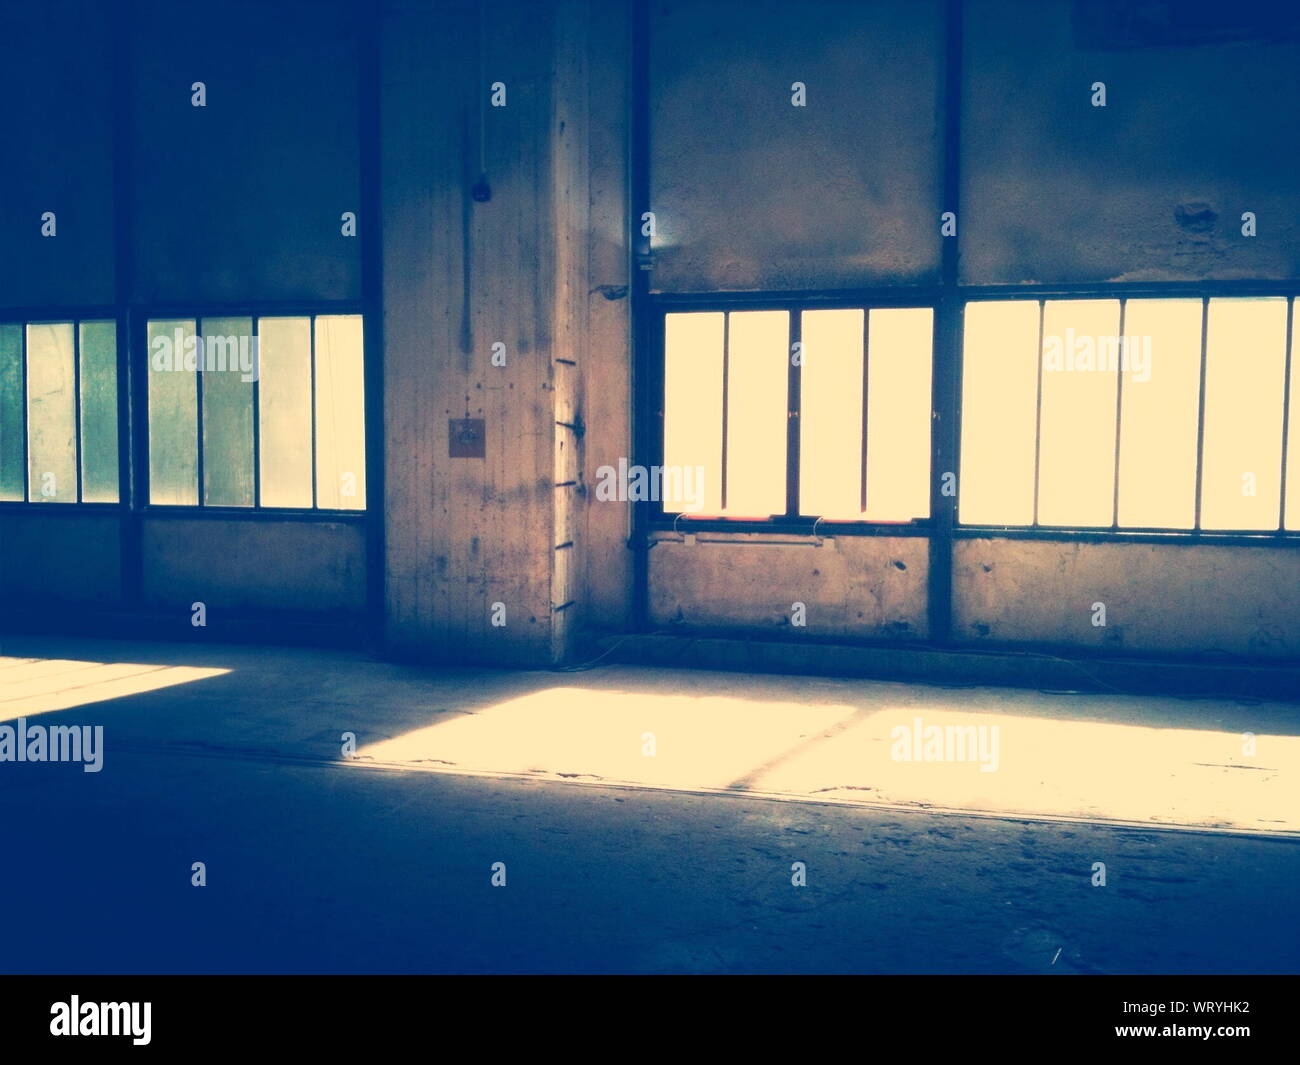 Desolate Building Interior With Windows Stock Photo